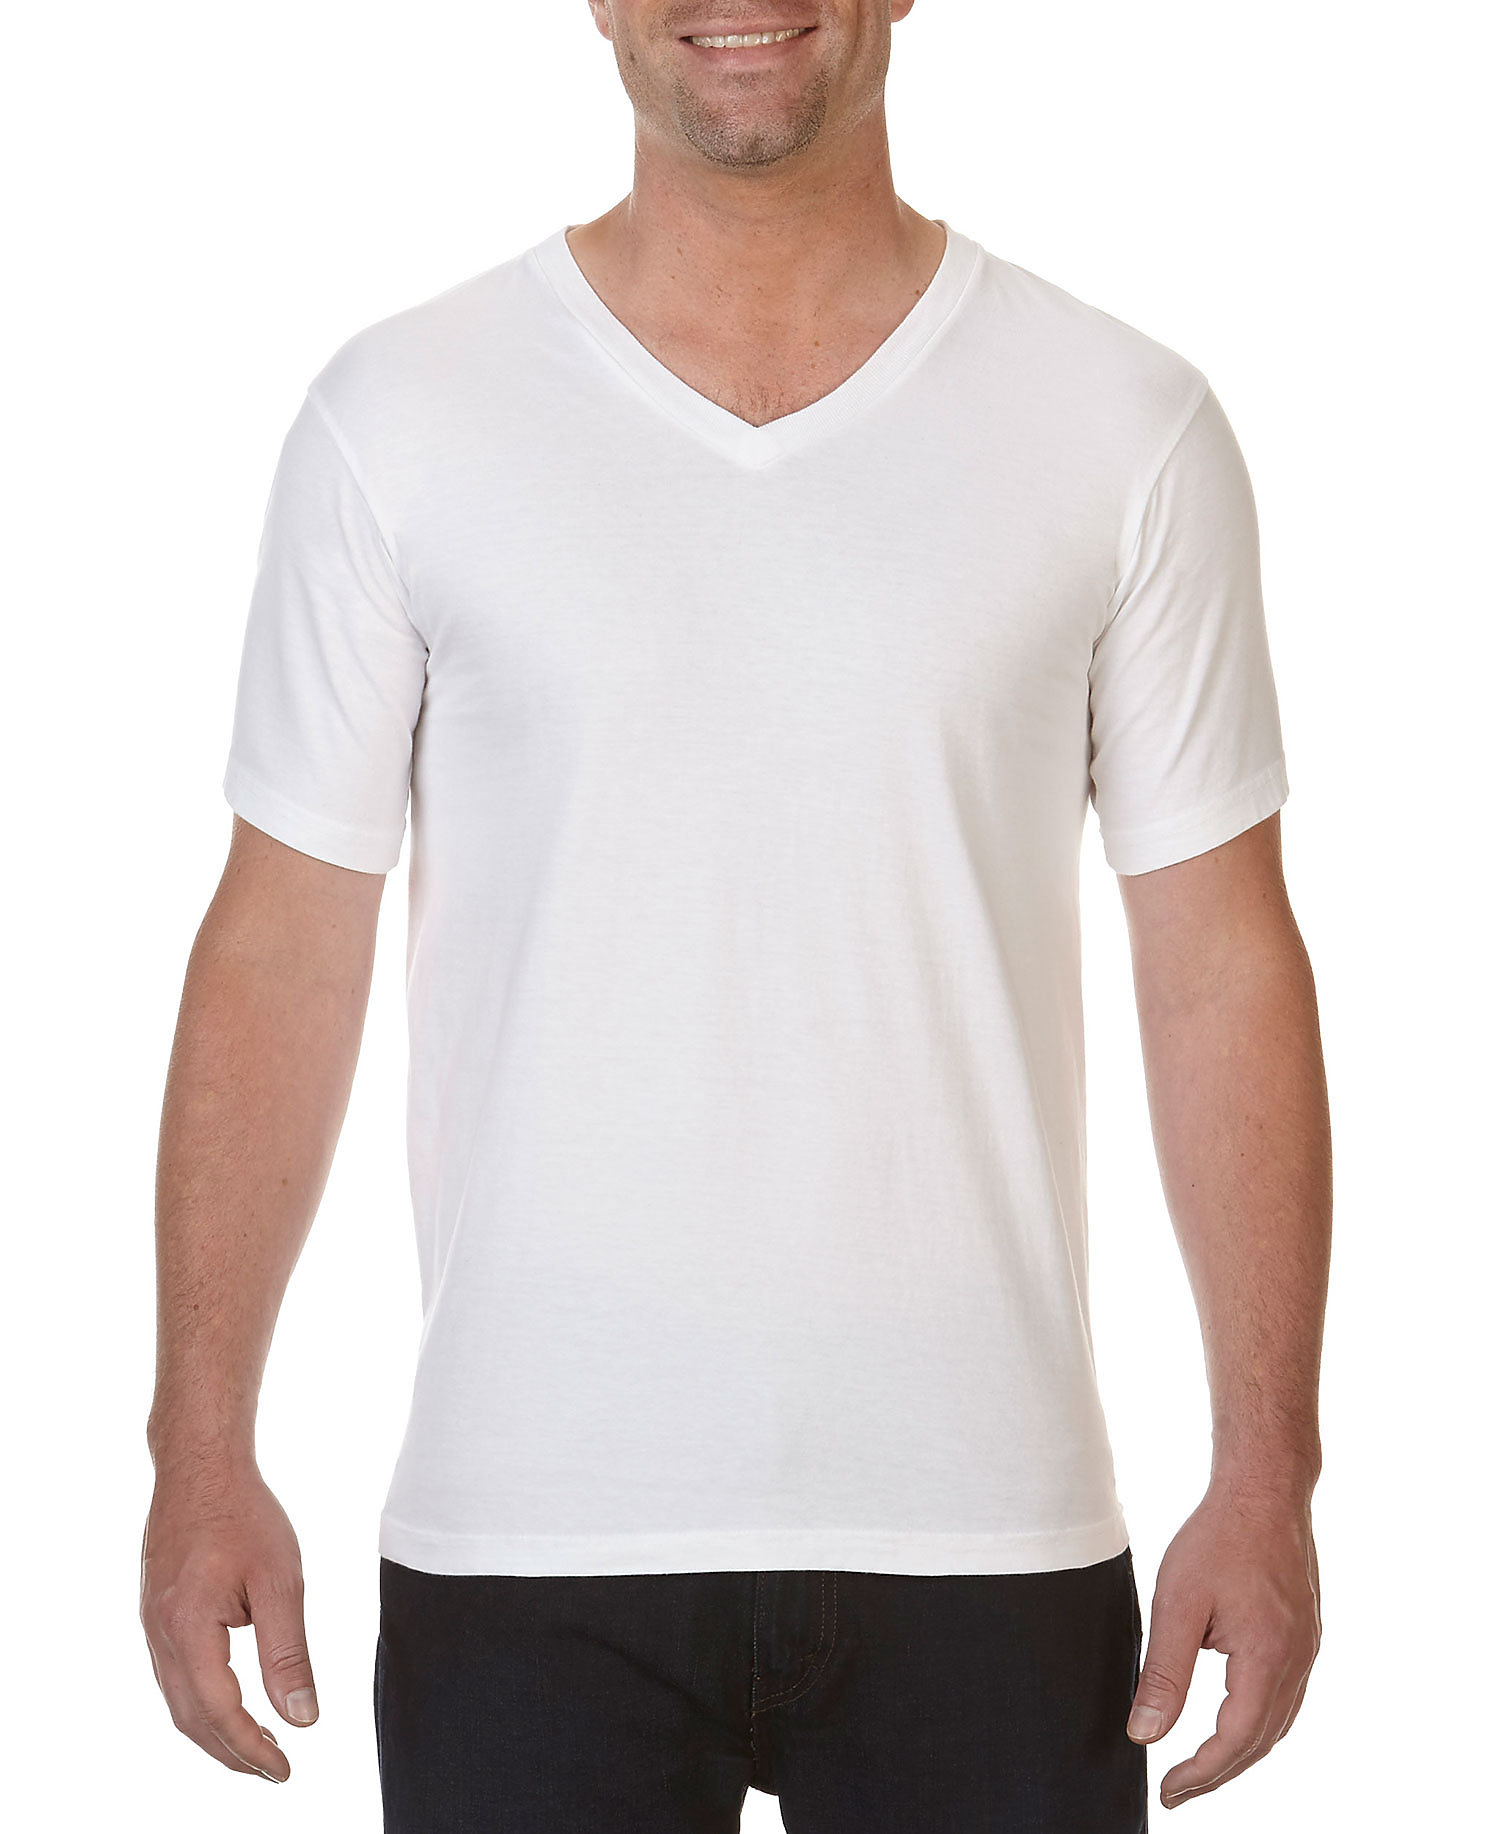 Comfort Colors 4099 Pigment Dyed V-Neck T-Shirt $5.88 - Men's T-Shirts